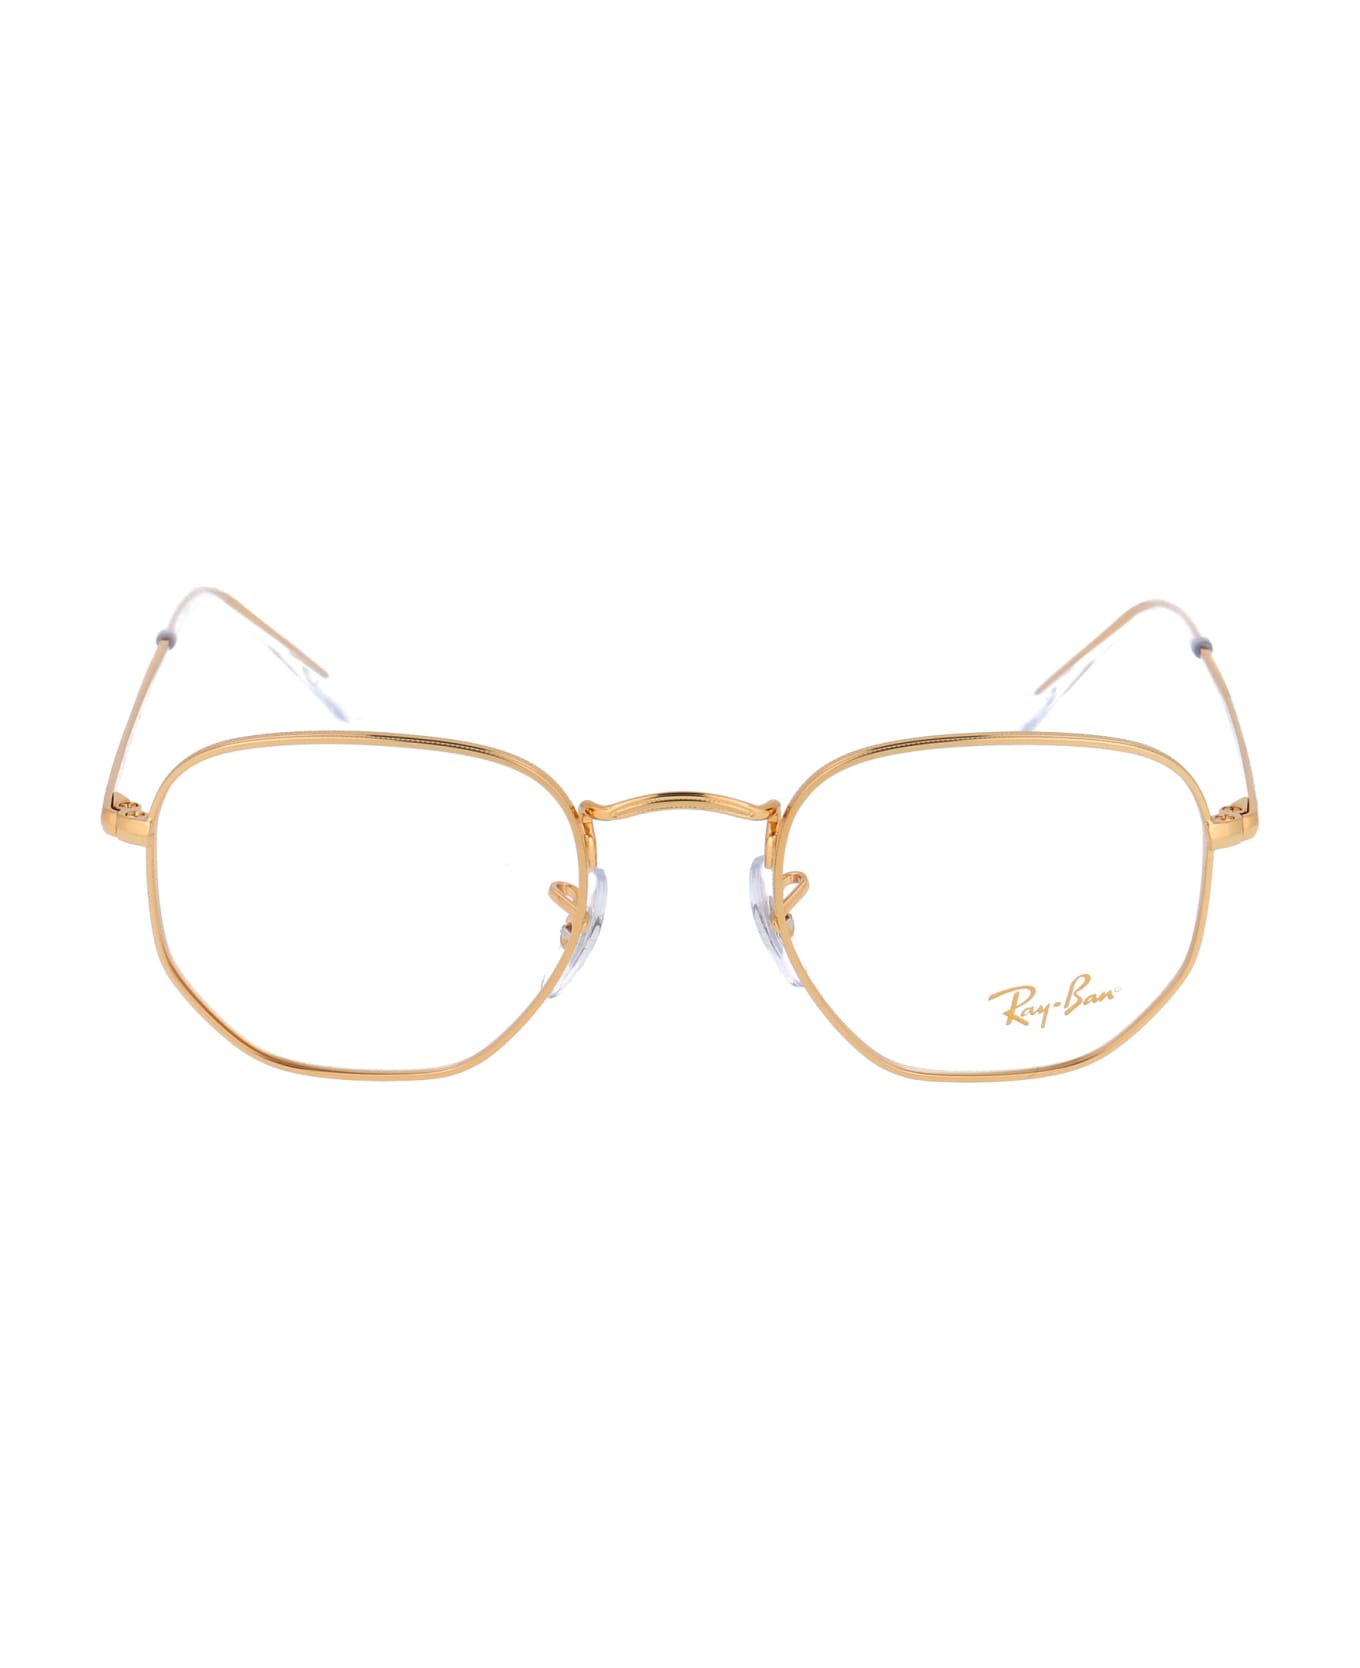 Ray-Ban Hexagonal Glasses - 3086 Gold